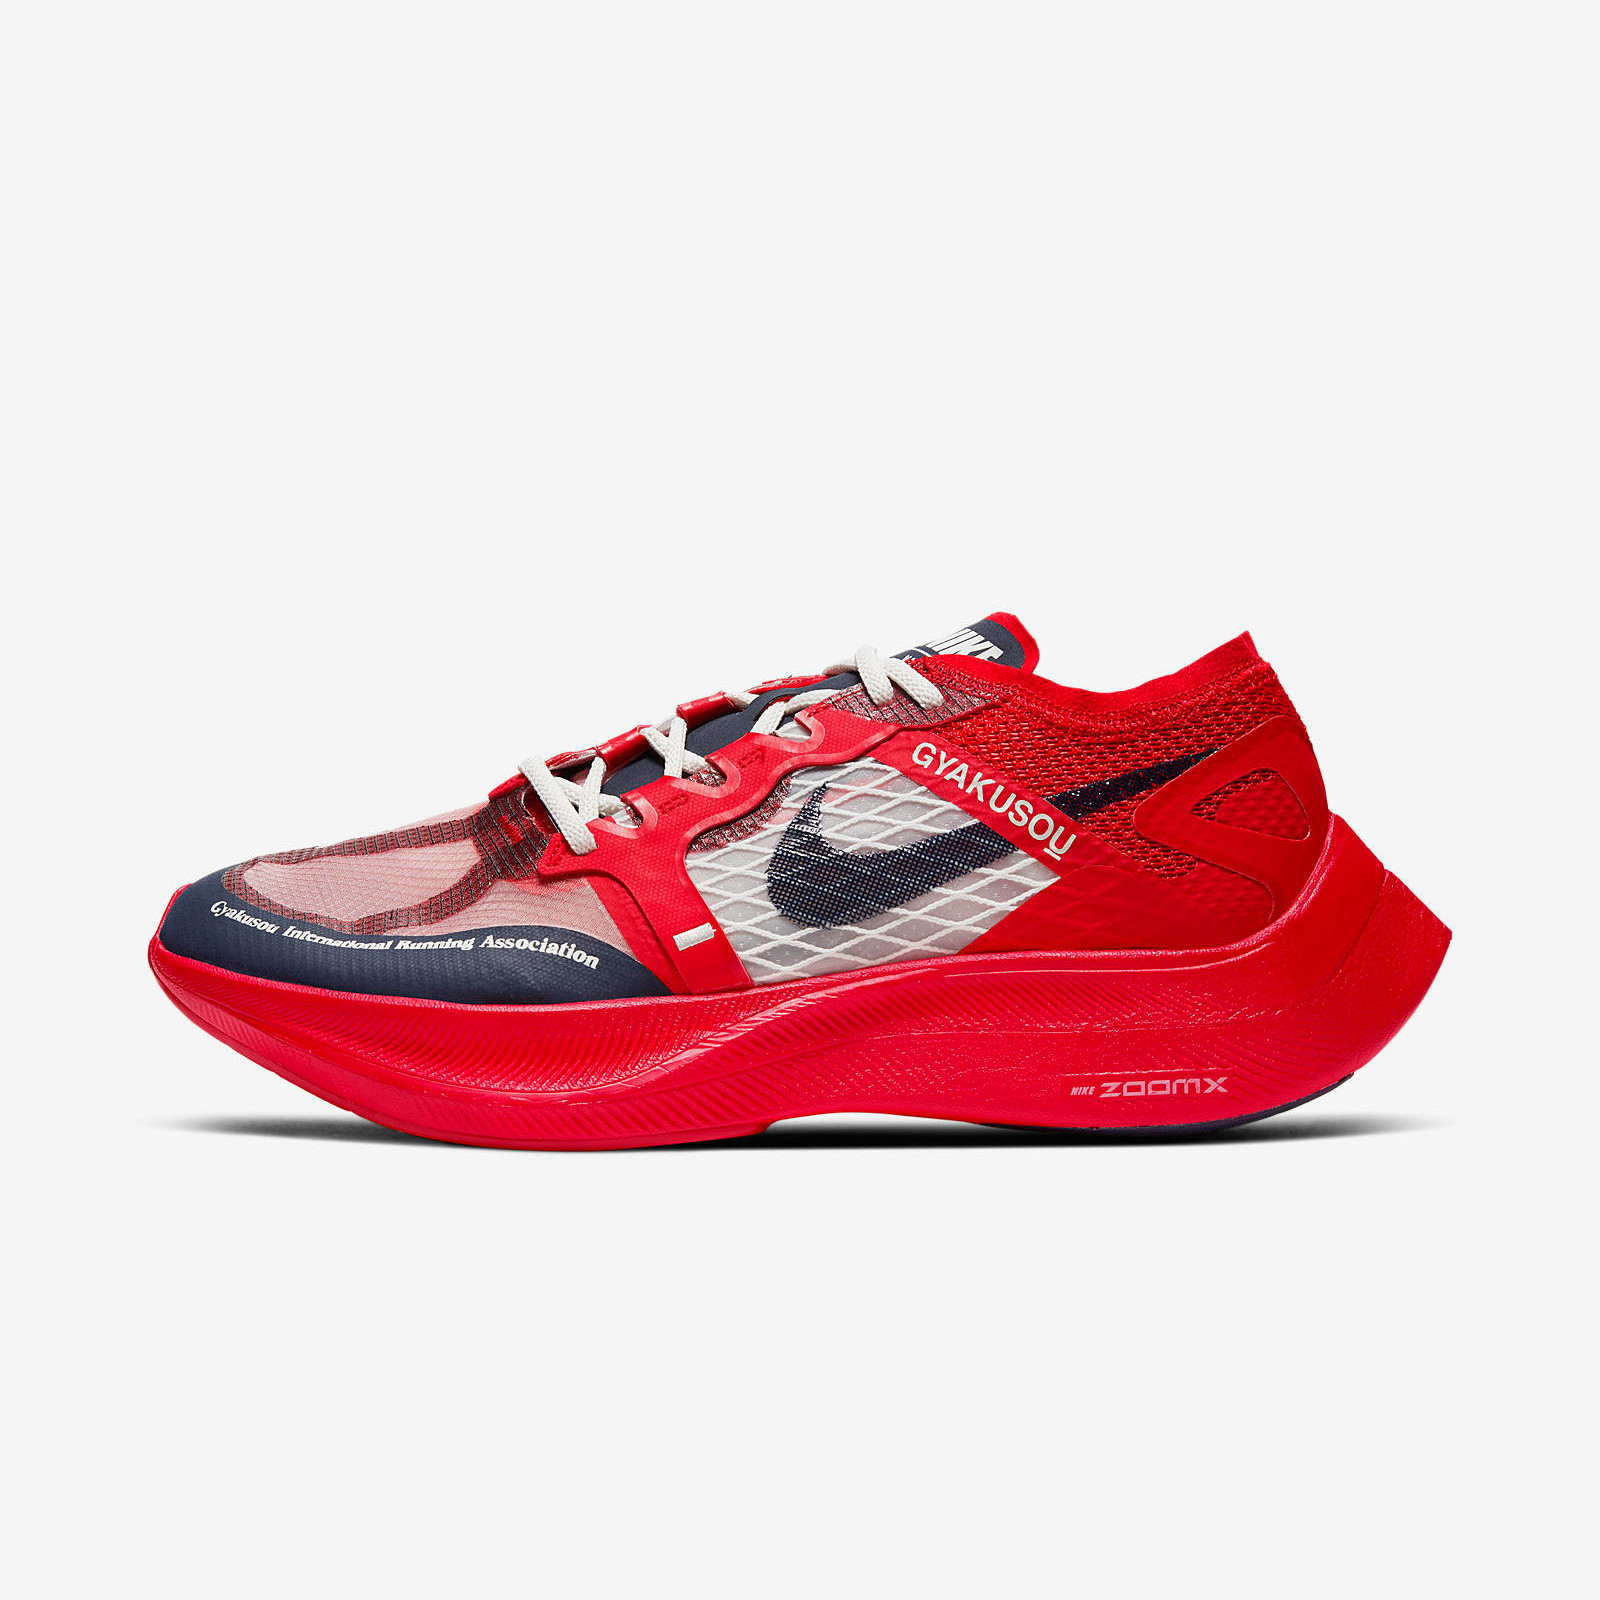 Nike Gyakusou
ZoomX Vaporfly
Red / Blue